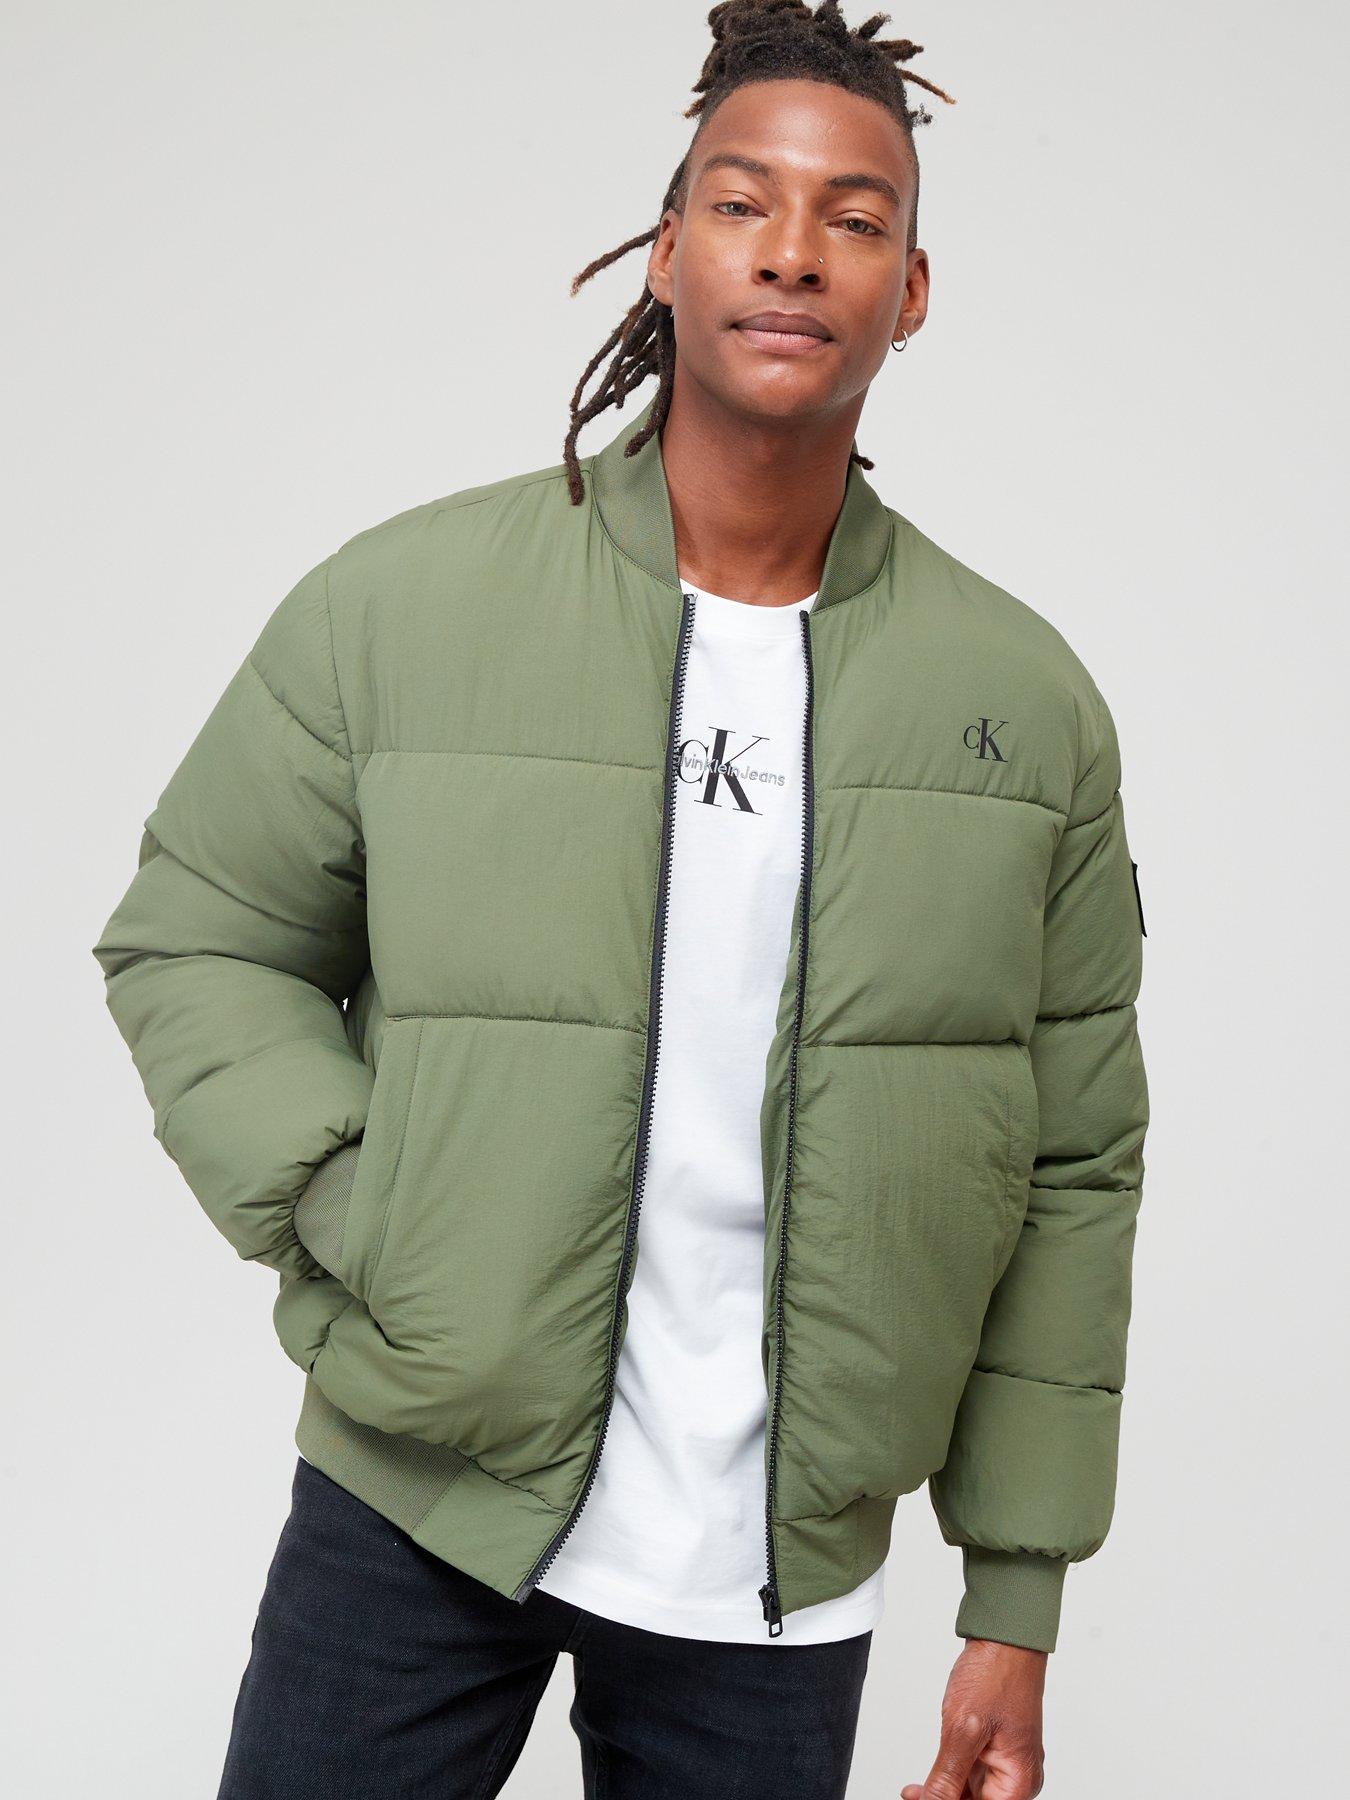 | - Jeans Ireland Green Jacket Bomber Commercial Calvin Very Klein